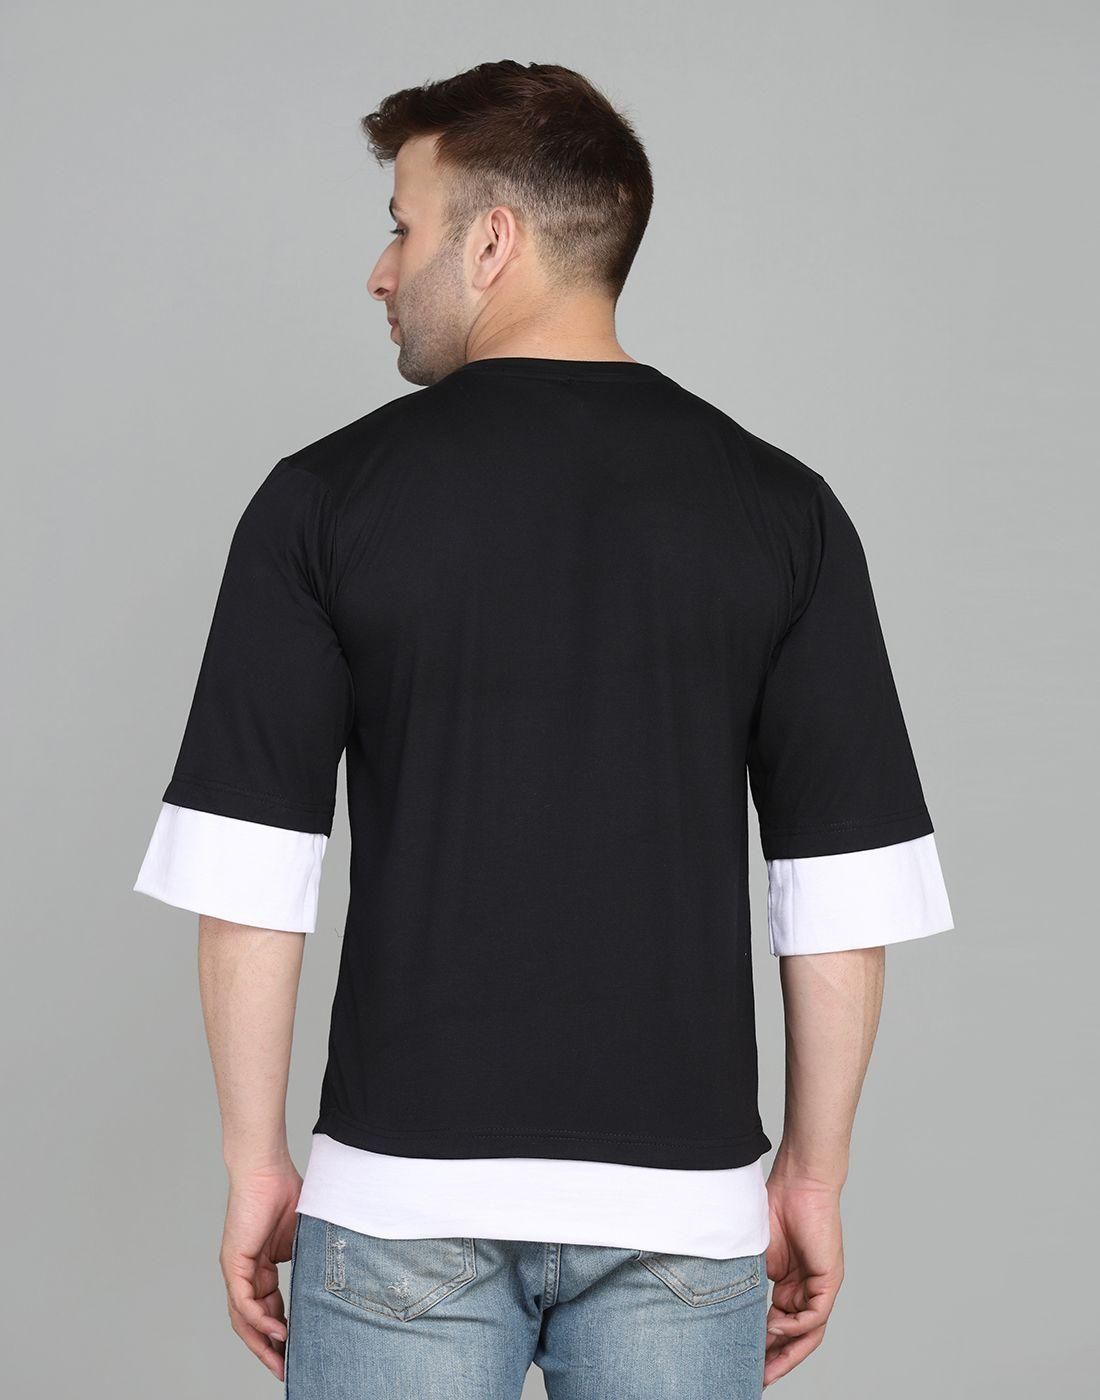 Denzolee Oversized Solid Round Neck T-Shirt For Men's